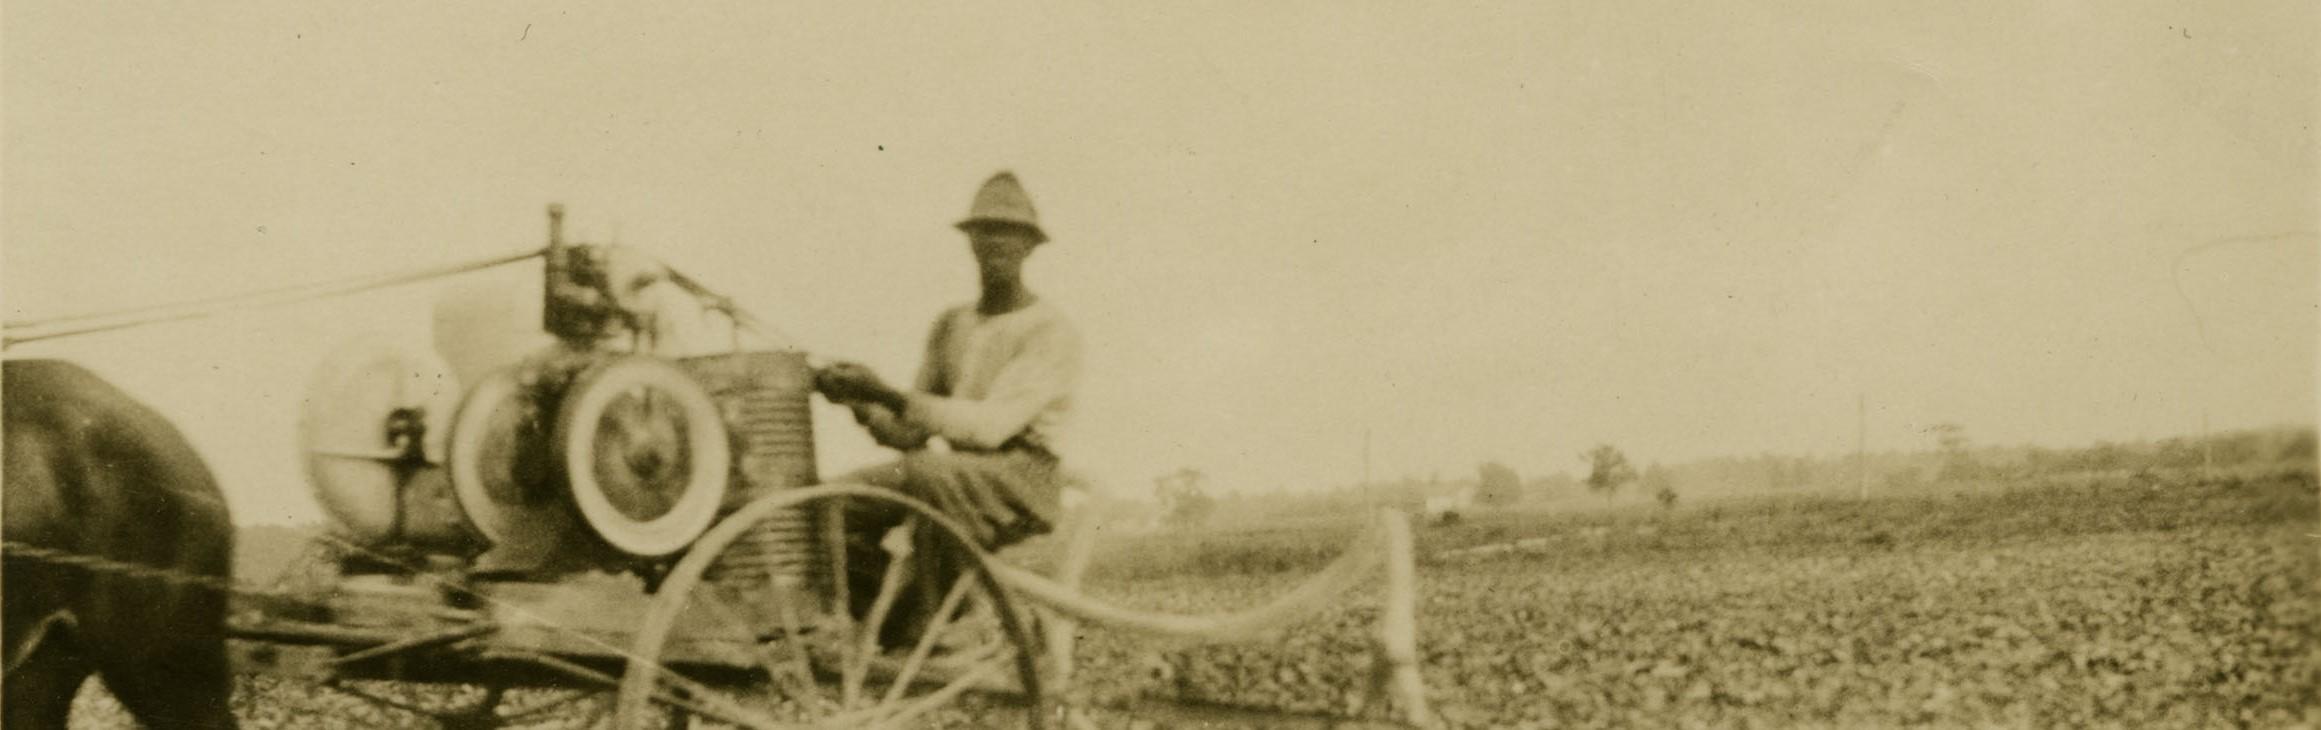 Black man sat atop a horse-drawn cart spraying fields